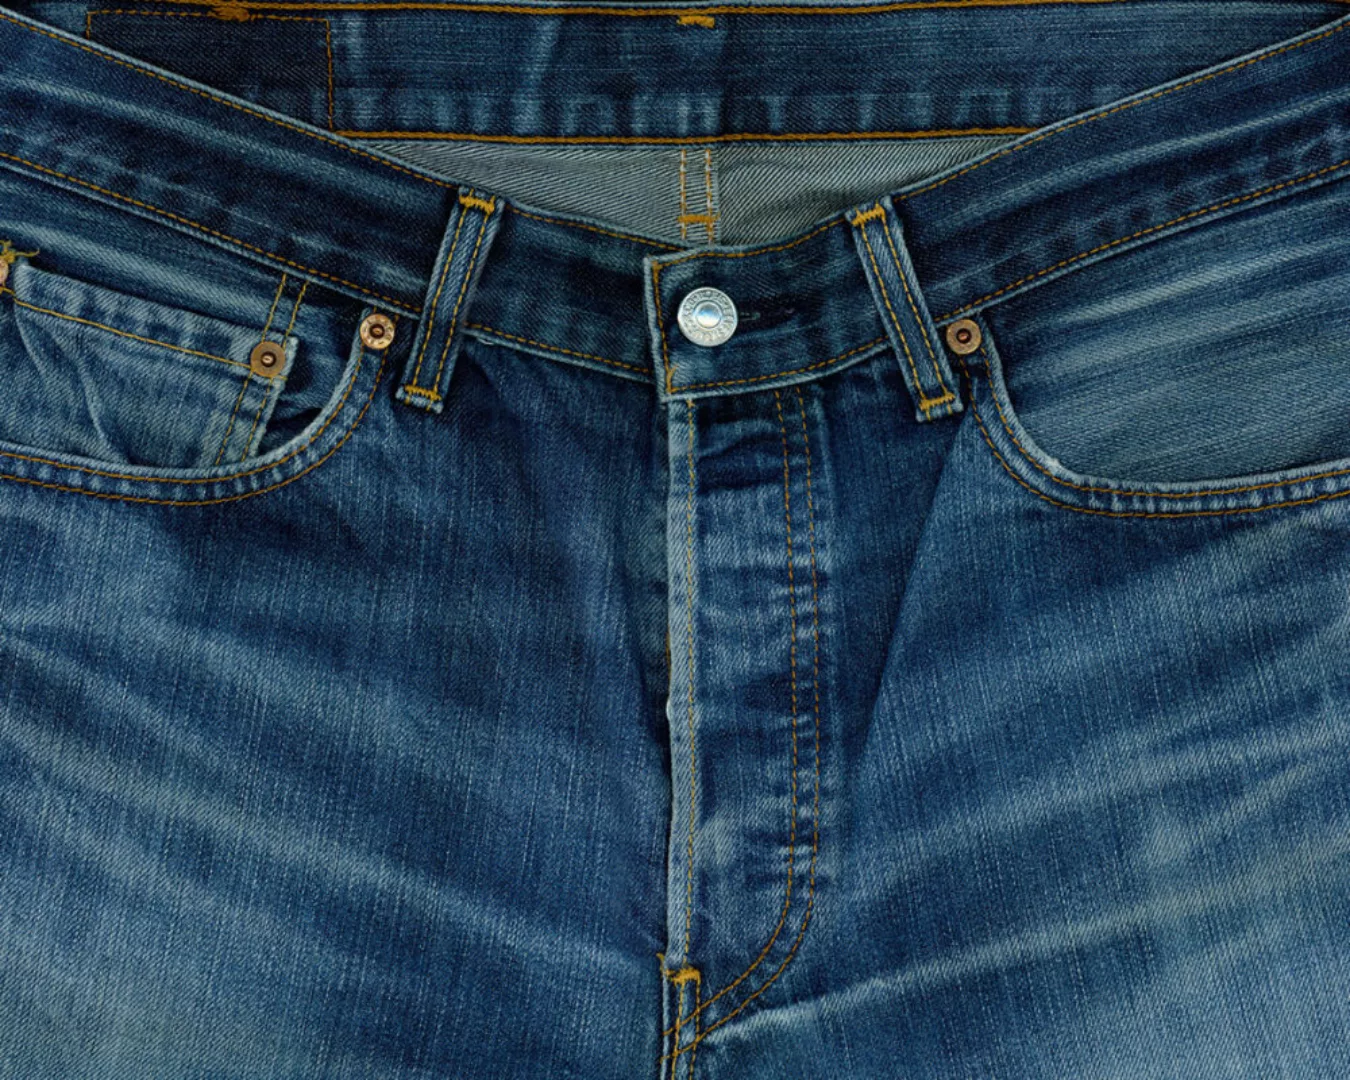 Fototapete "Jeans blau" 4,00x2,50 m / Strukturvlies Klassik günstig online kaufen